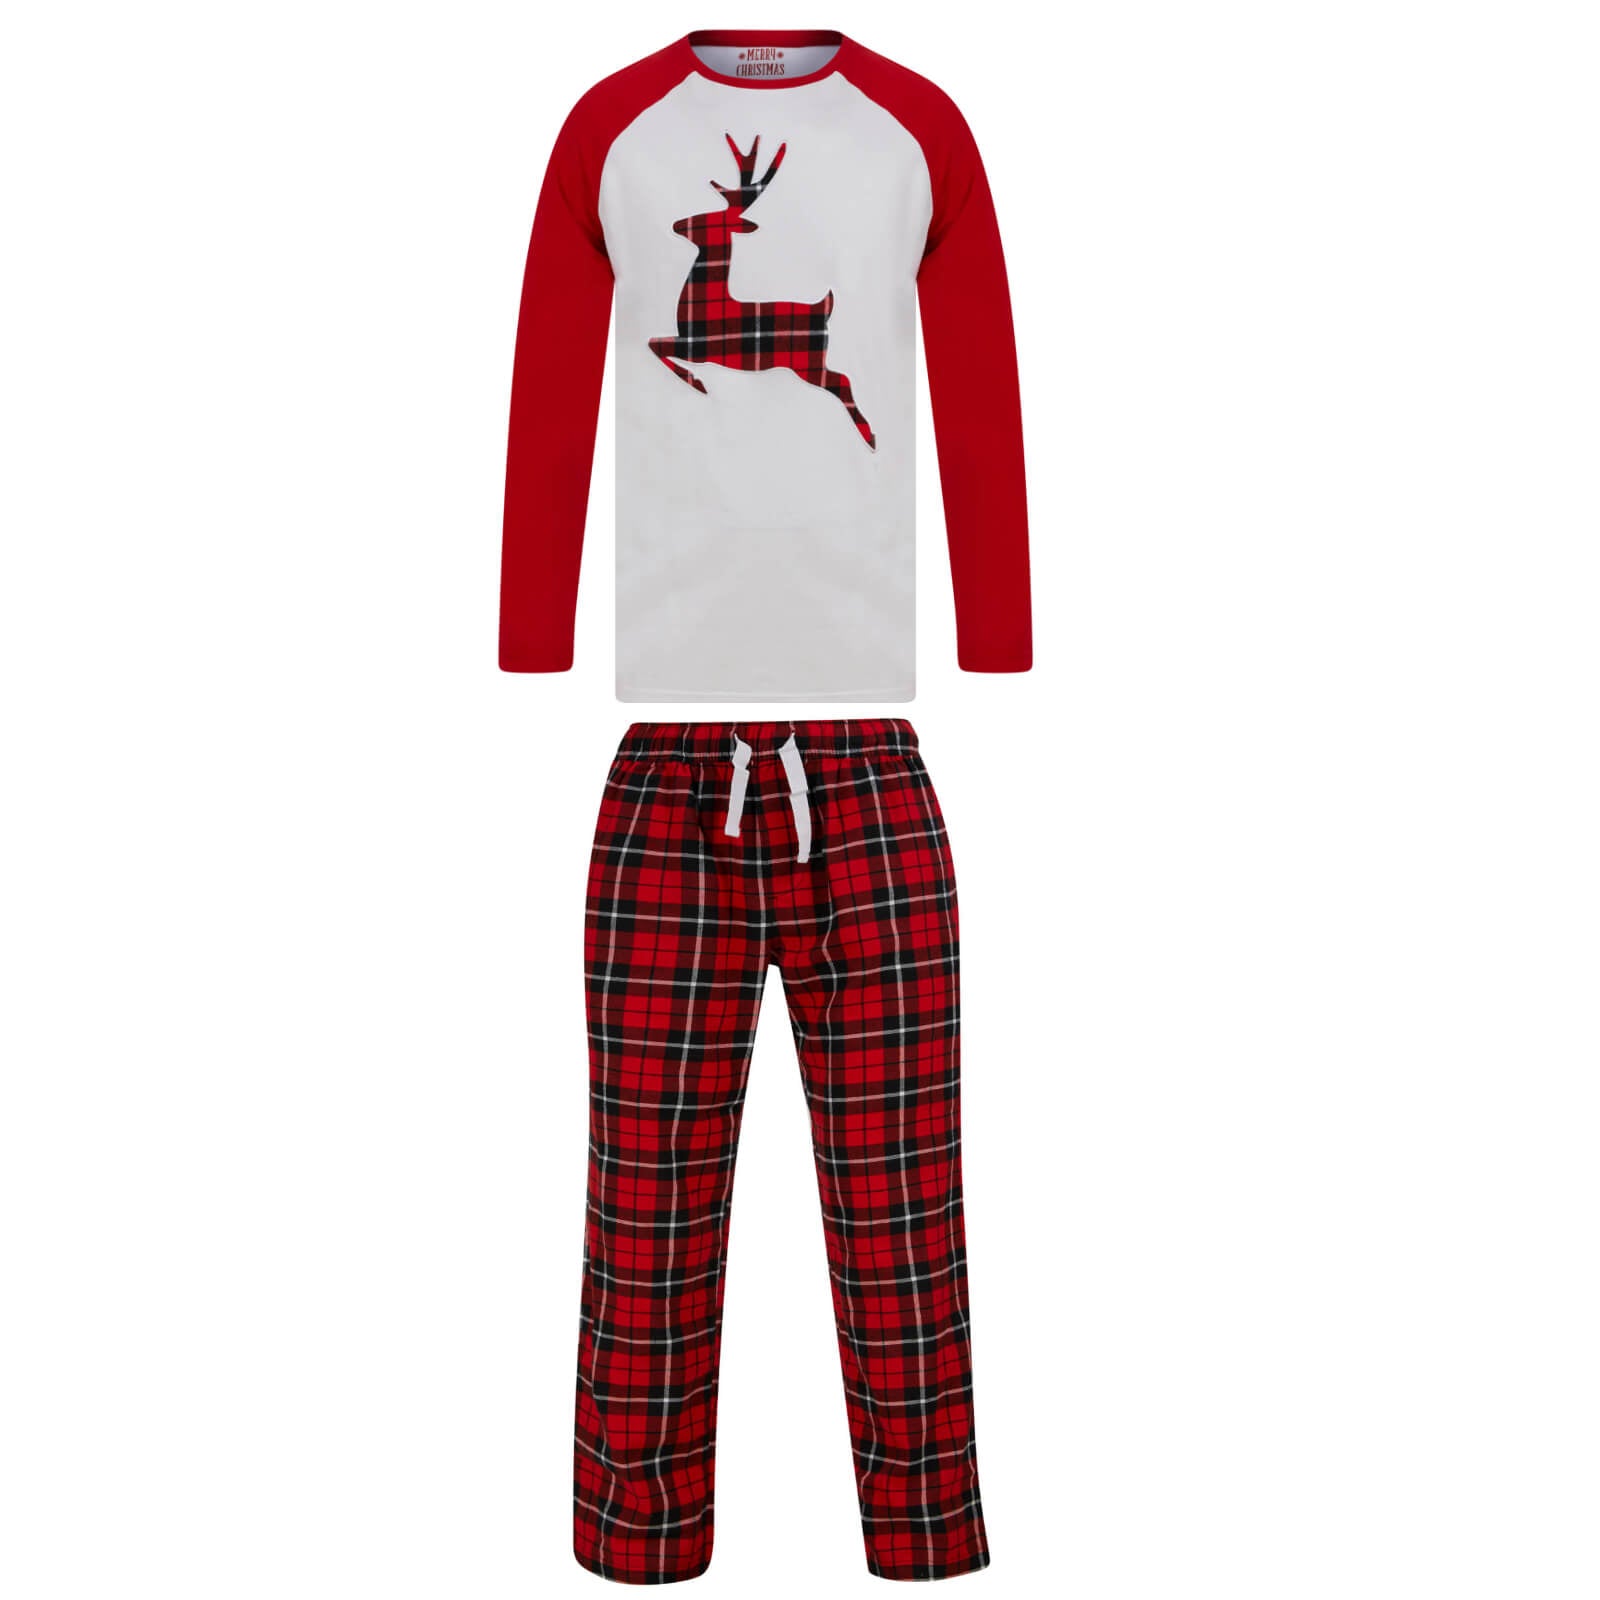 Mr Crimbo Kids Christmas Pyjama Set Reindeer/Stag Red Navy - MrCrimbo.co.uk -SRG2Q17458_A - Red/White -11-13